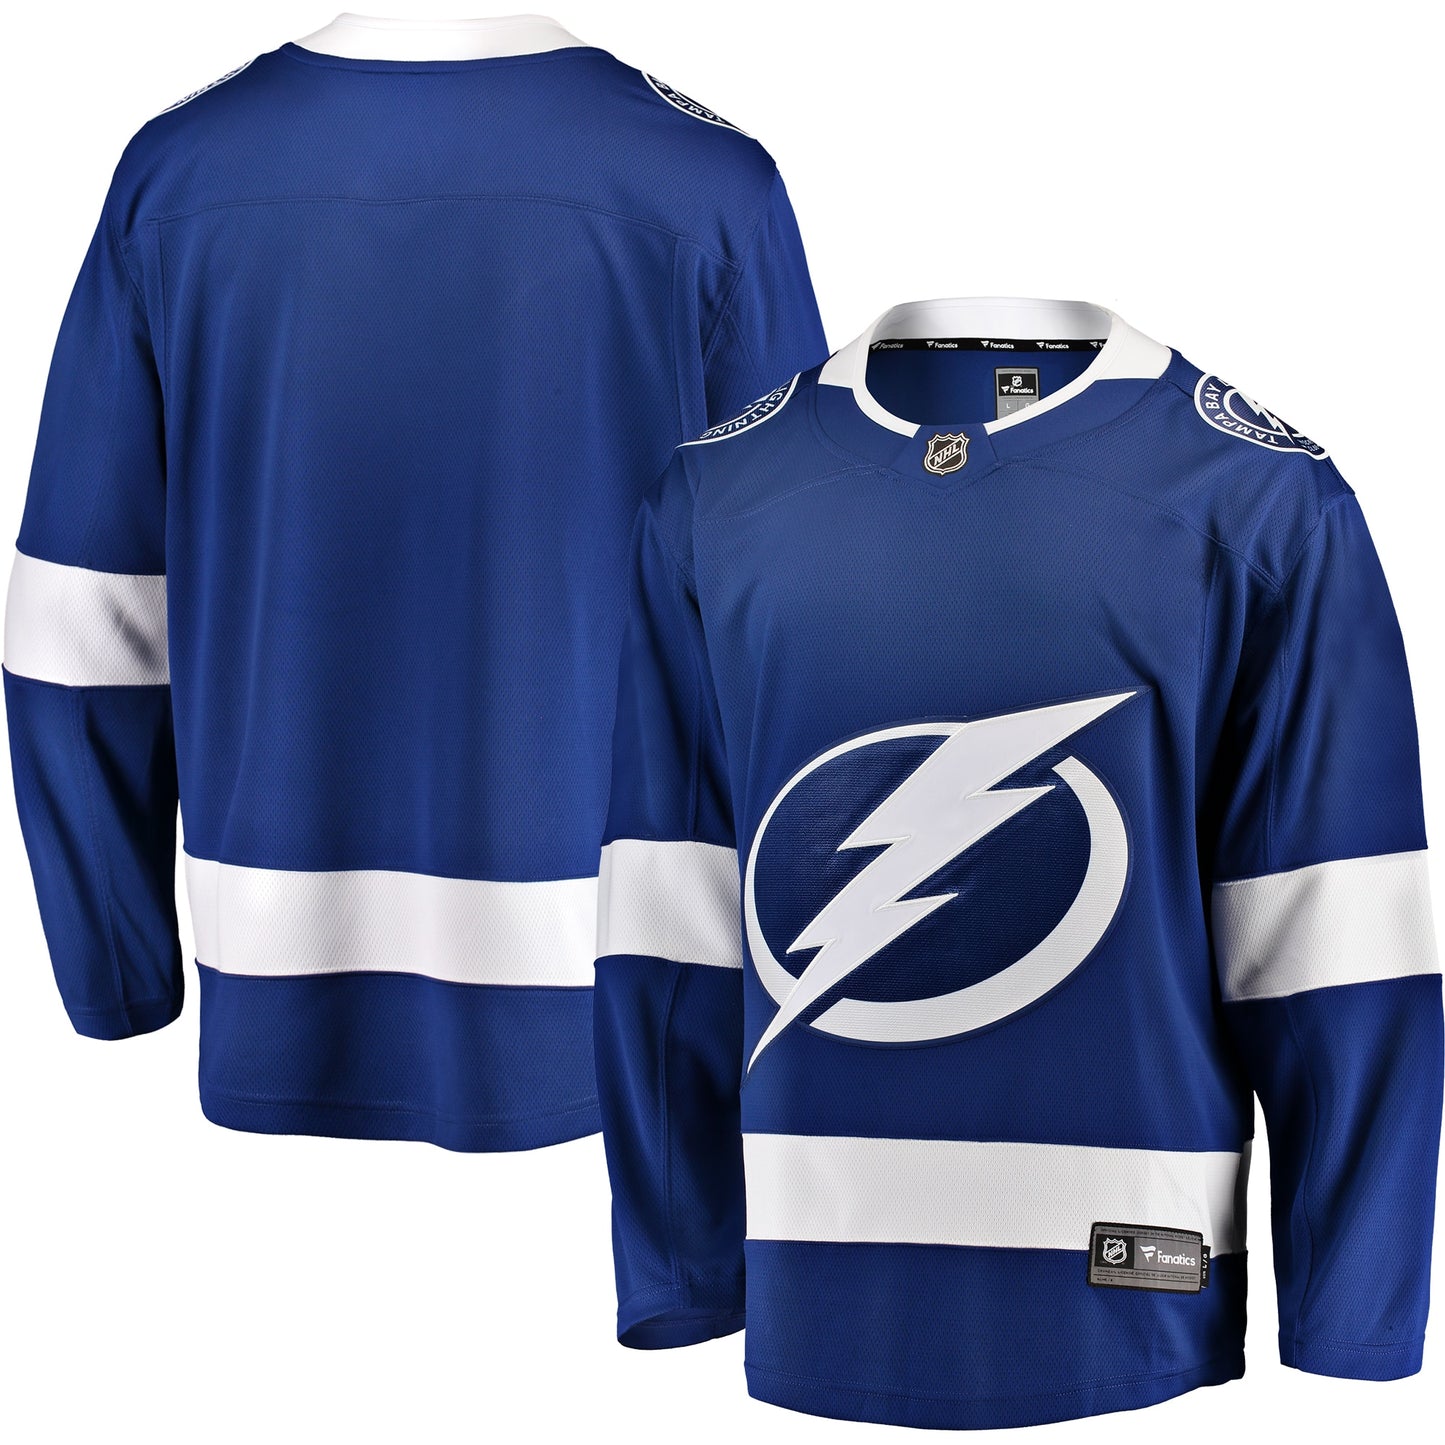 Tampa Bay Lightning Fanatics Branded Breakaway Home Jersey - Blue